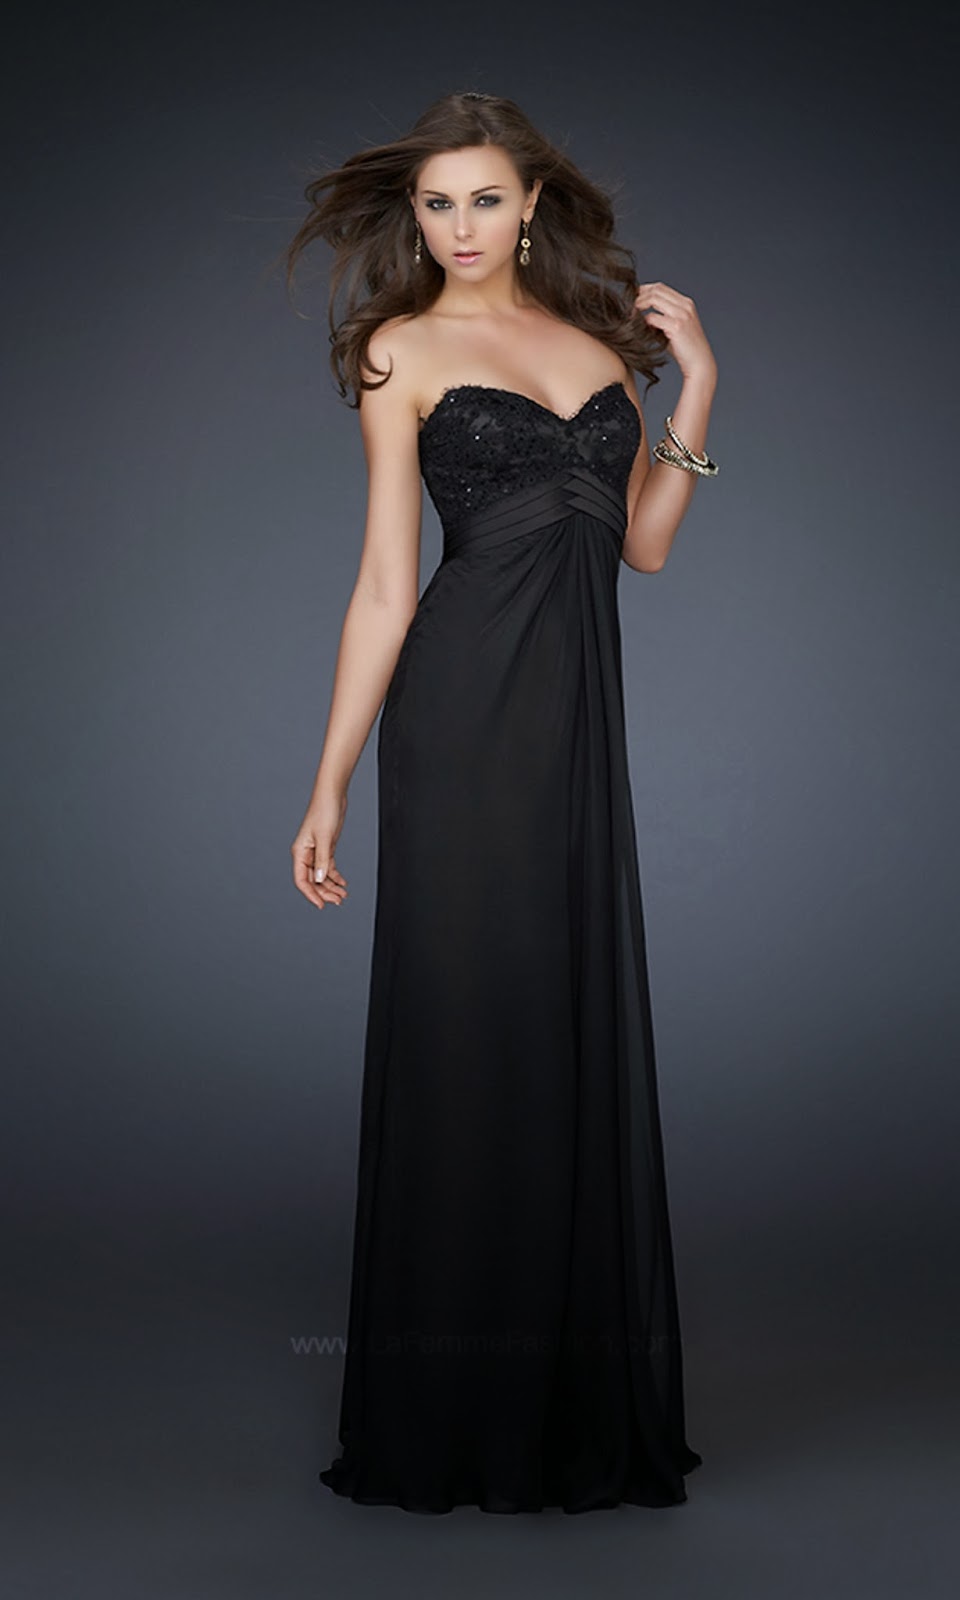 Classy Evening Dress Dressfashiontv Blogspot